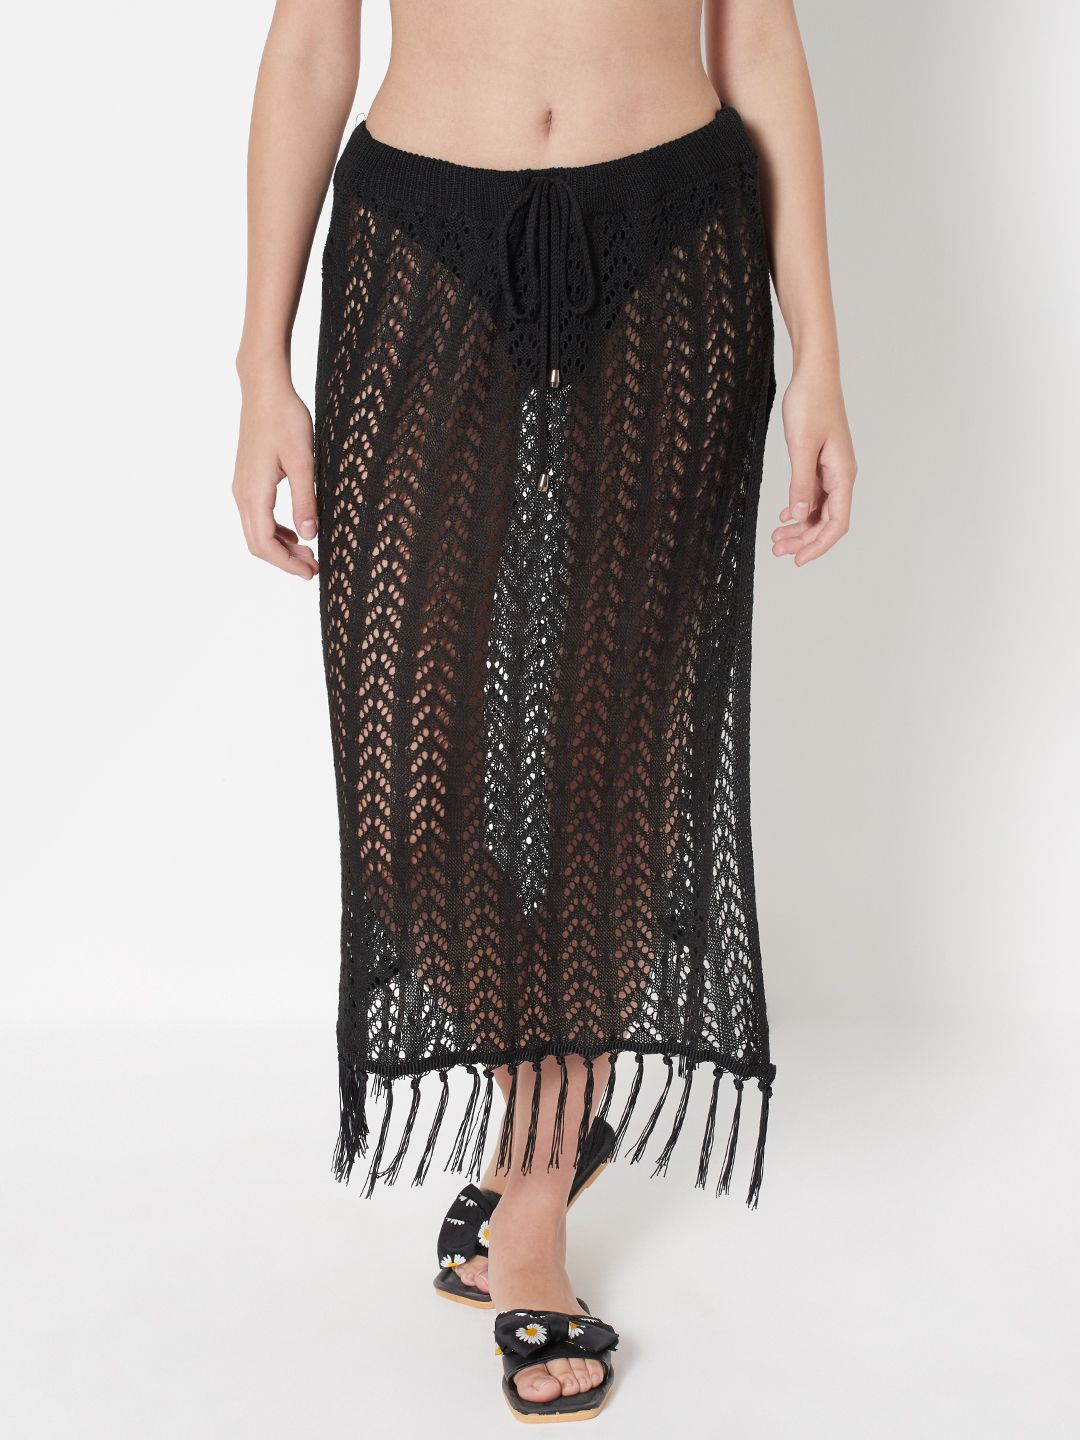 URBANIC Black Crochet Swim Cover Up Skirt with Side Slit Price in India